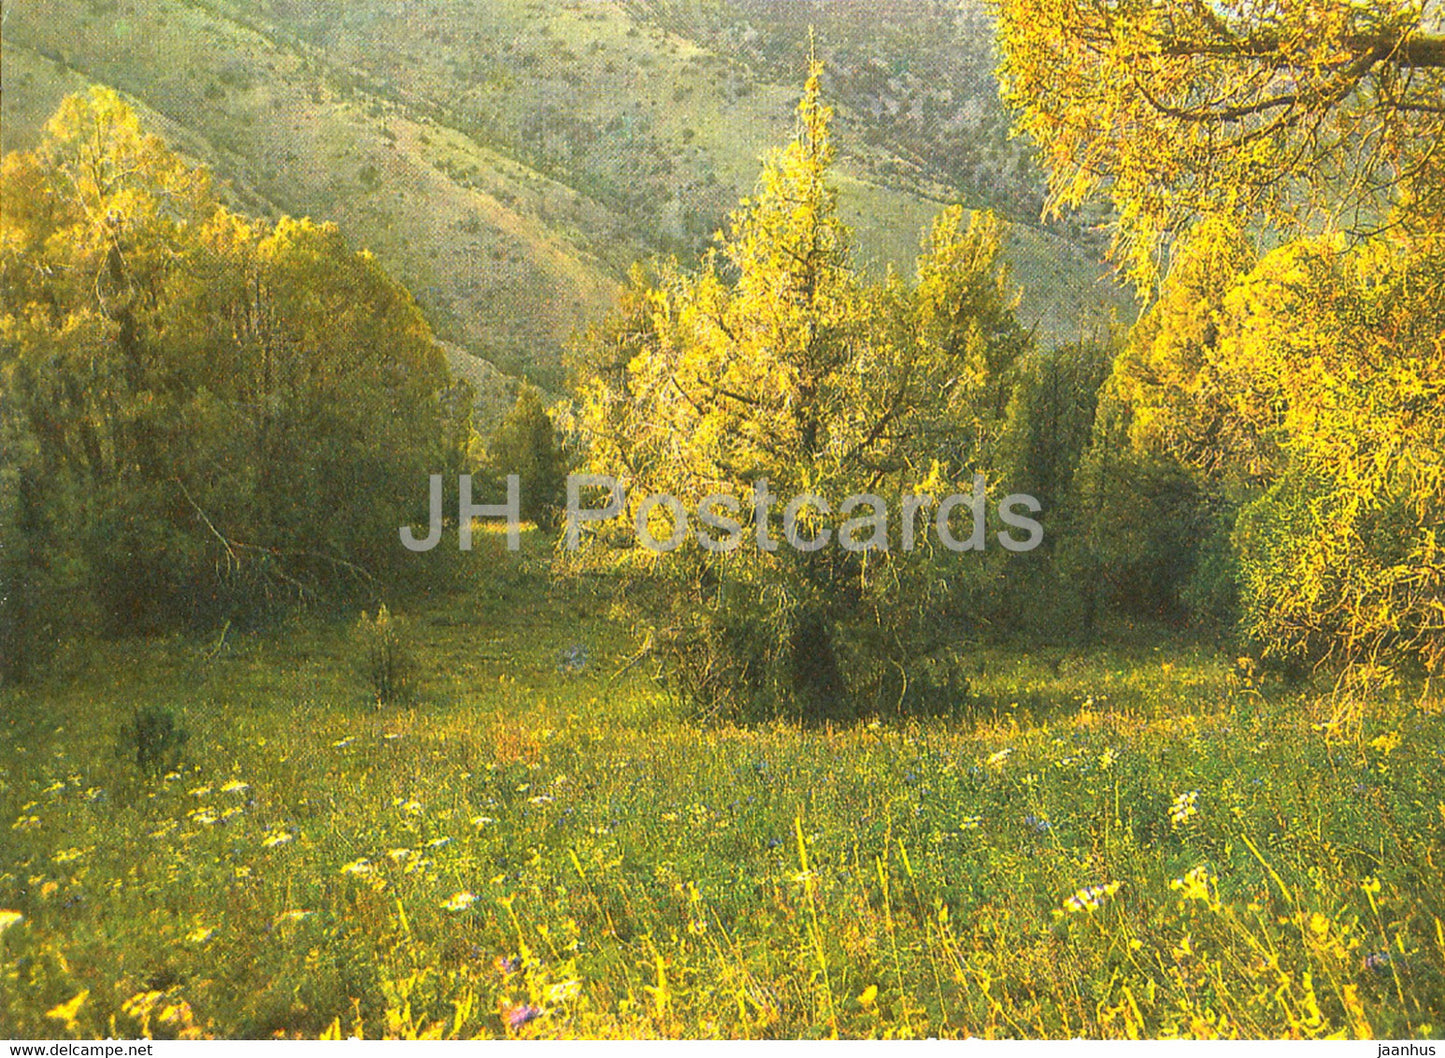 Juniper forest of the Zaamin reserve - Nature Trails - 1981 - Uzbekistan USSR - unused - JH Postcards